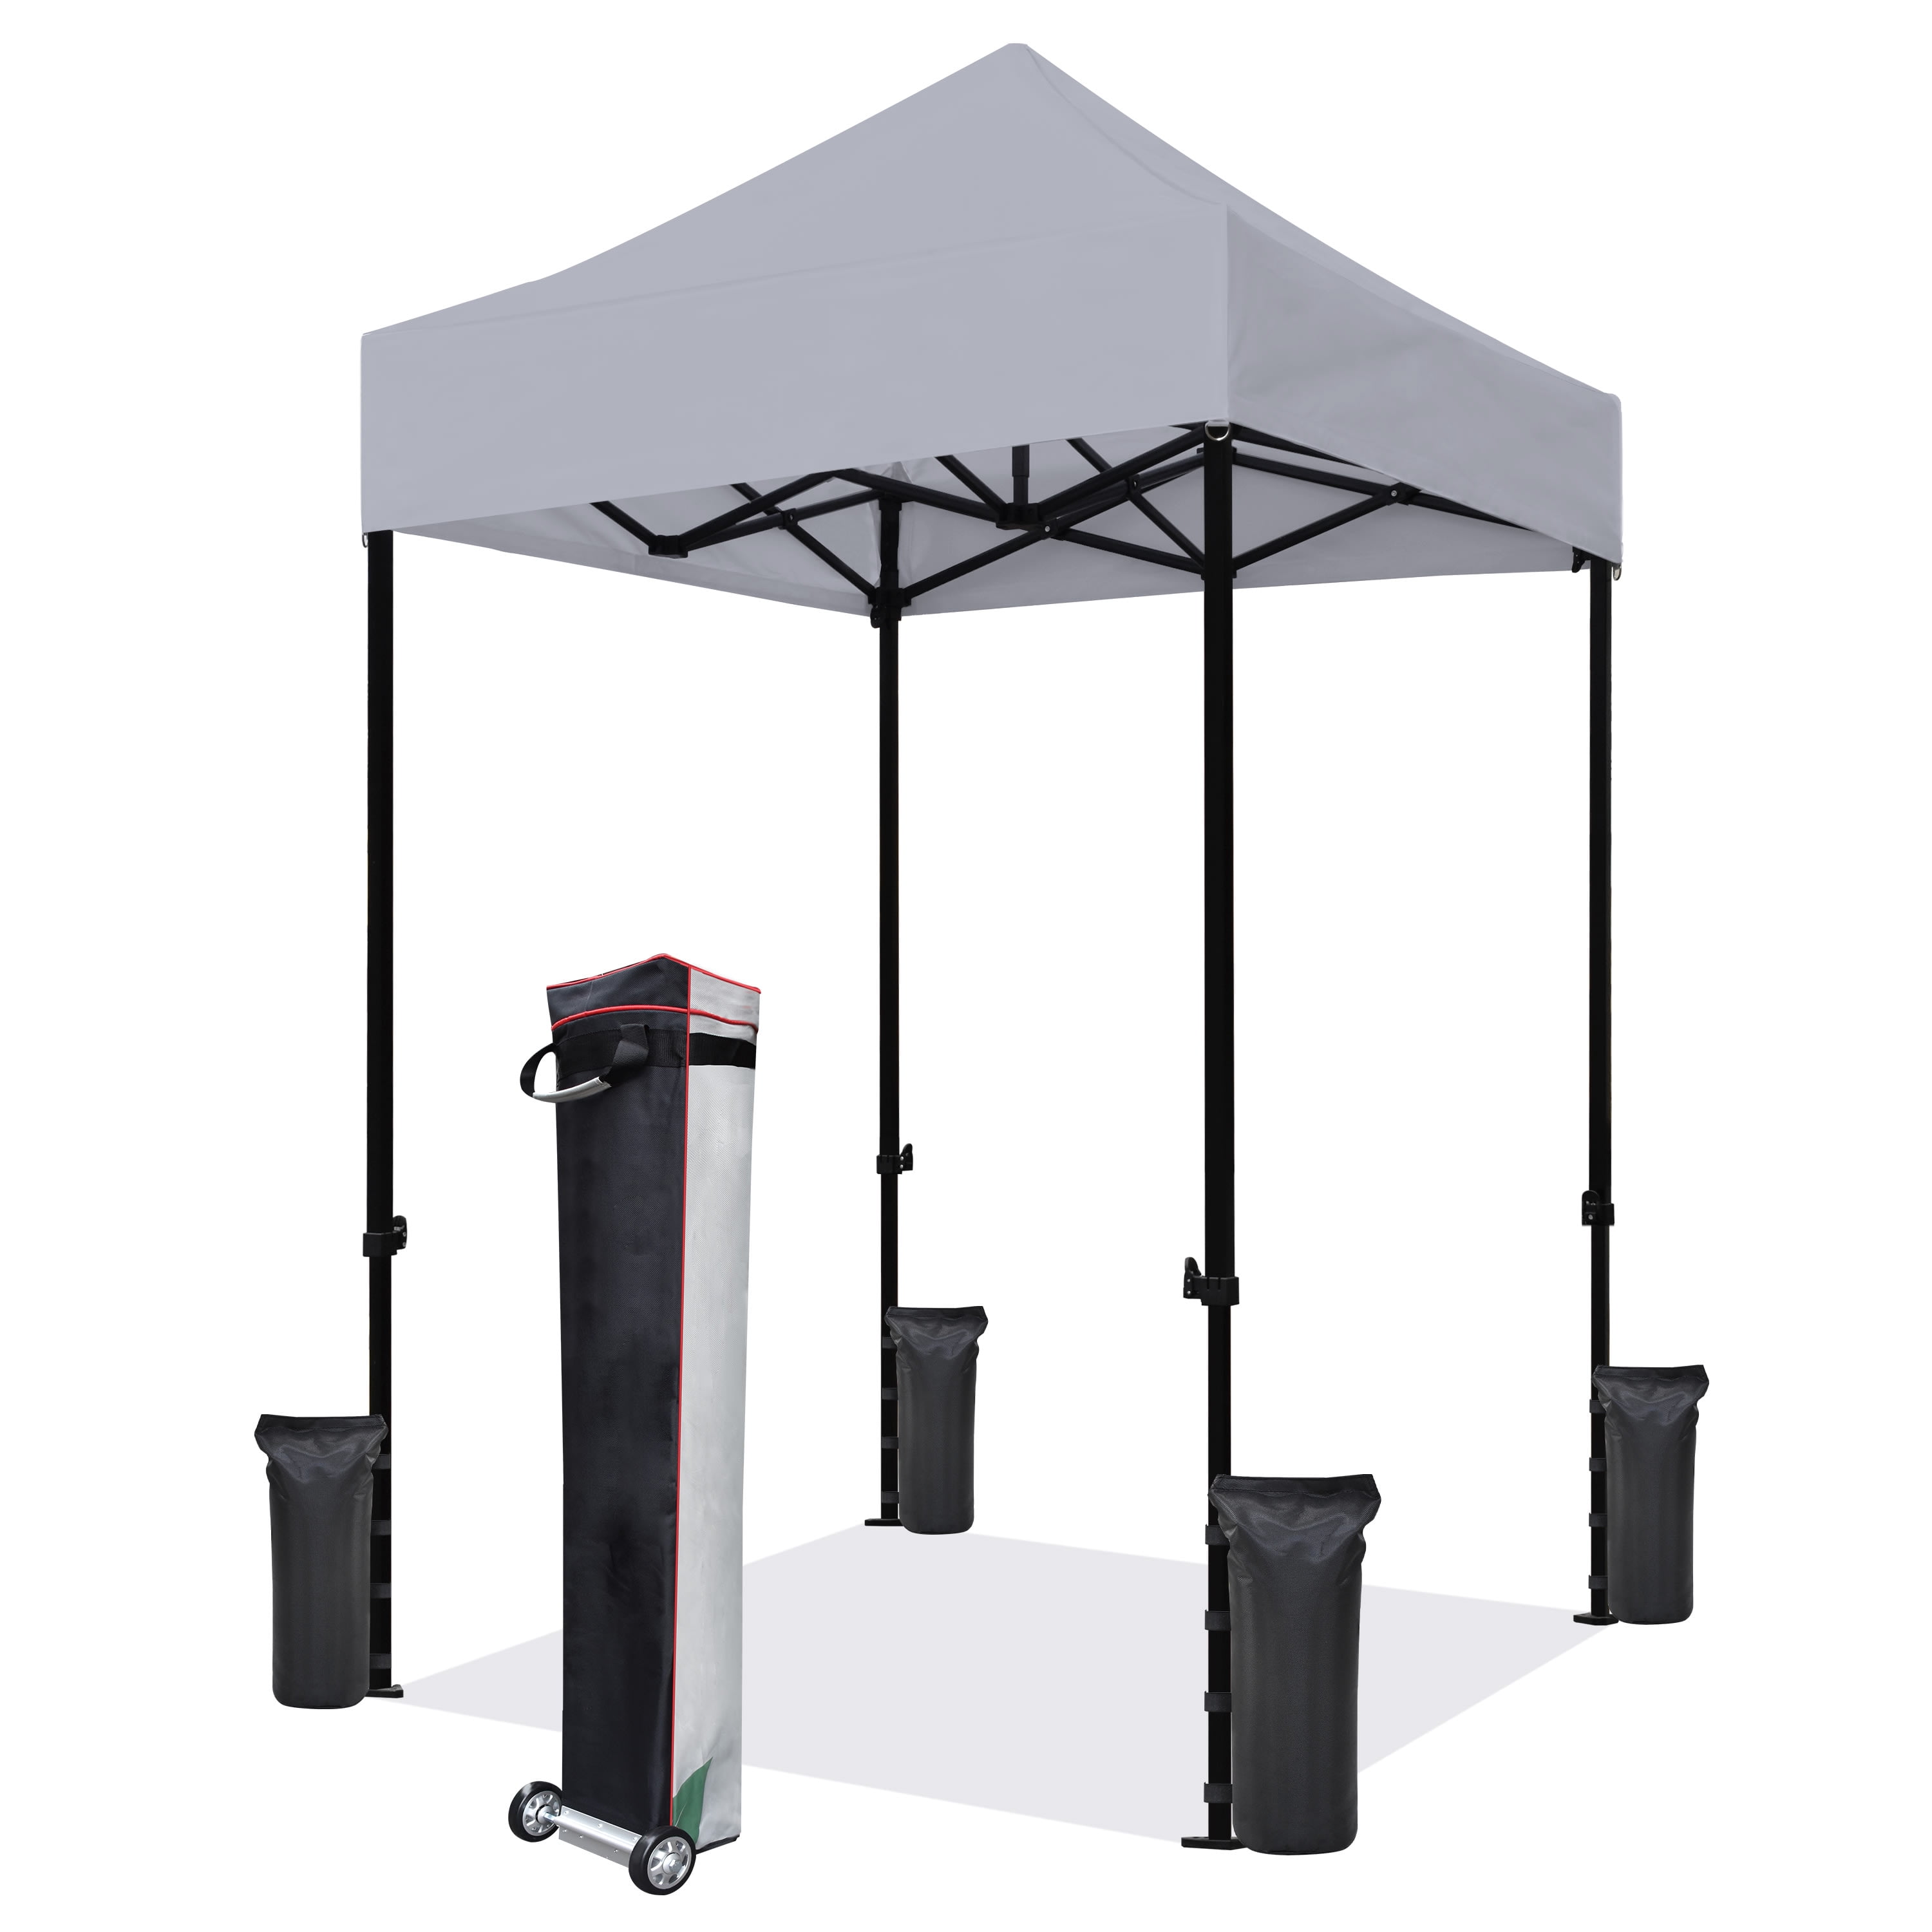 Eurmax 5x5 Pop up Canopy Outdoor Heavy Duty Tent,Grey - Walmart.com